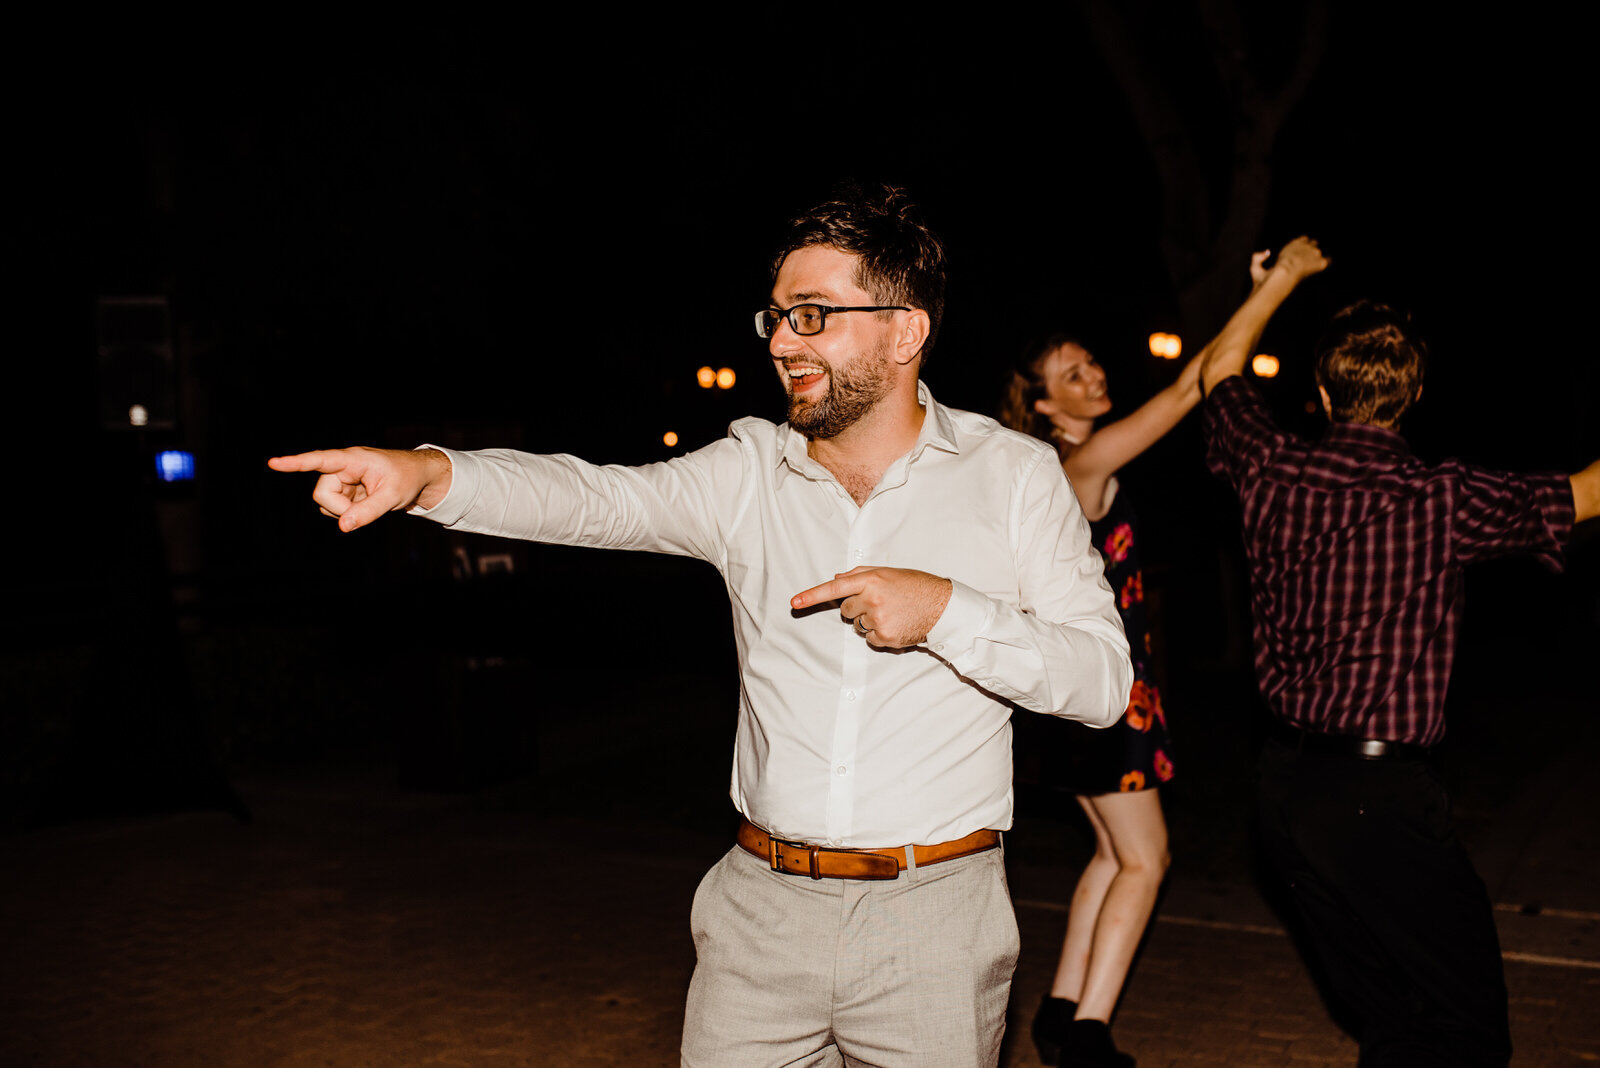 Fun dancing at Heritage park wedding reception